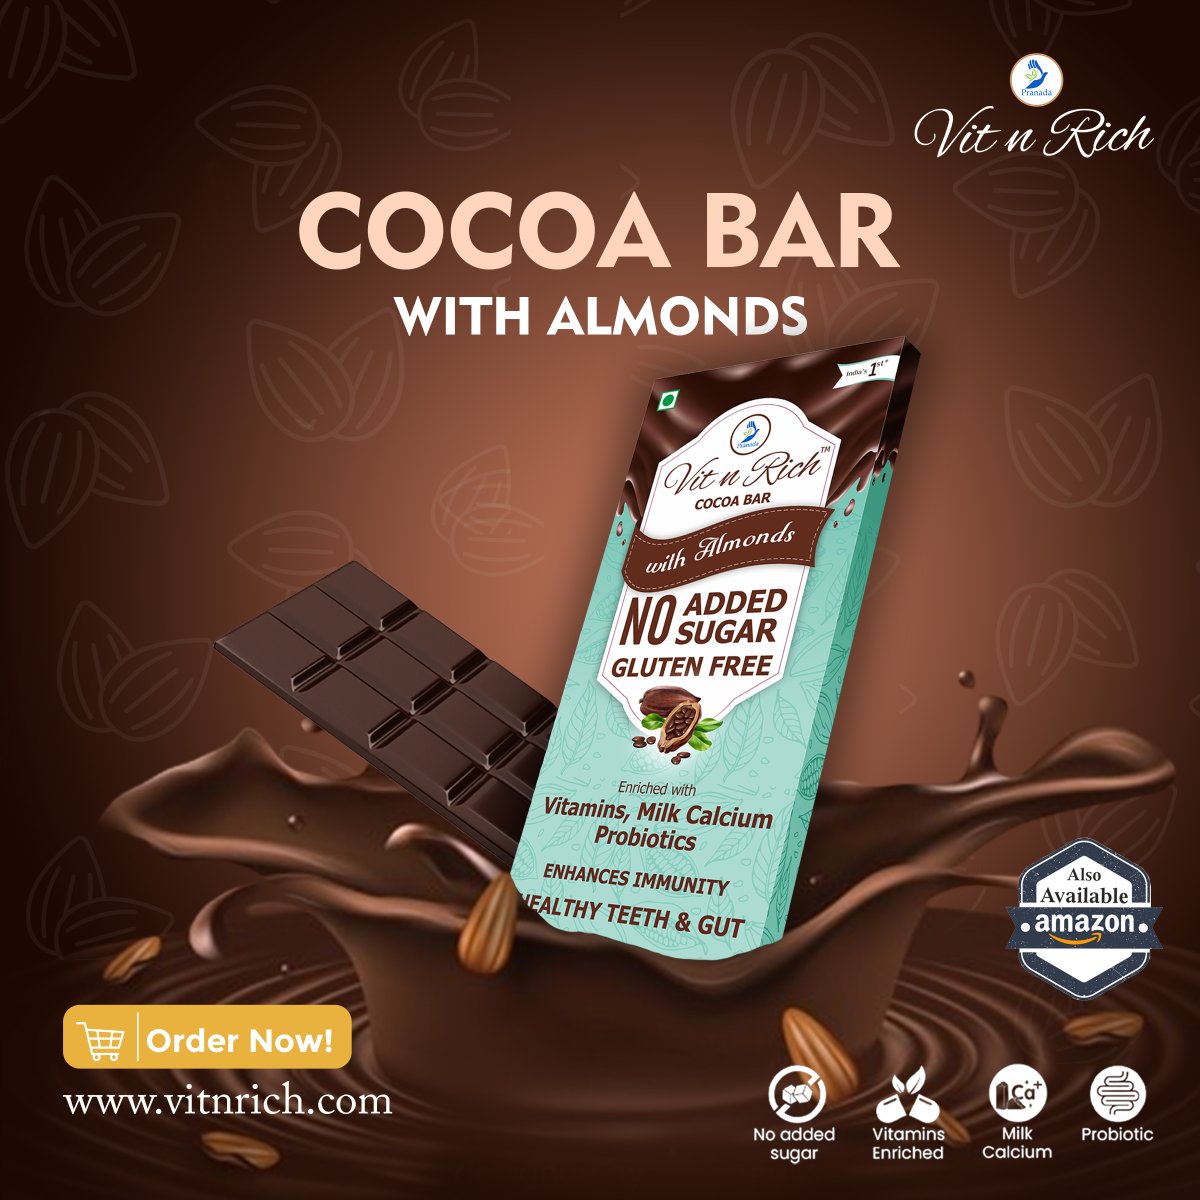 Cocoa Bar with Almonds
Order Now :- vitnrich.com/collections/pr…
Amazon :- Amazon Product Link :- amazon.in/dp/B0BZ4F556Y
#CocoaBar #vitnrichchocolate #noaddedsugar